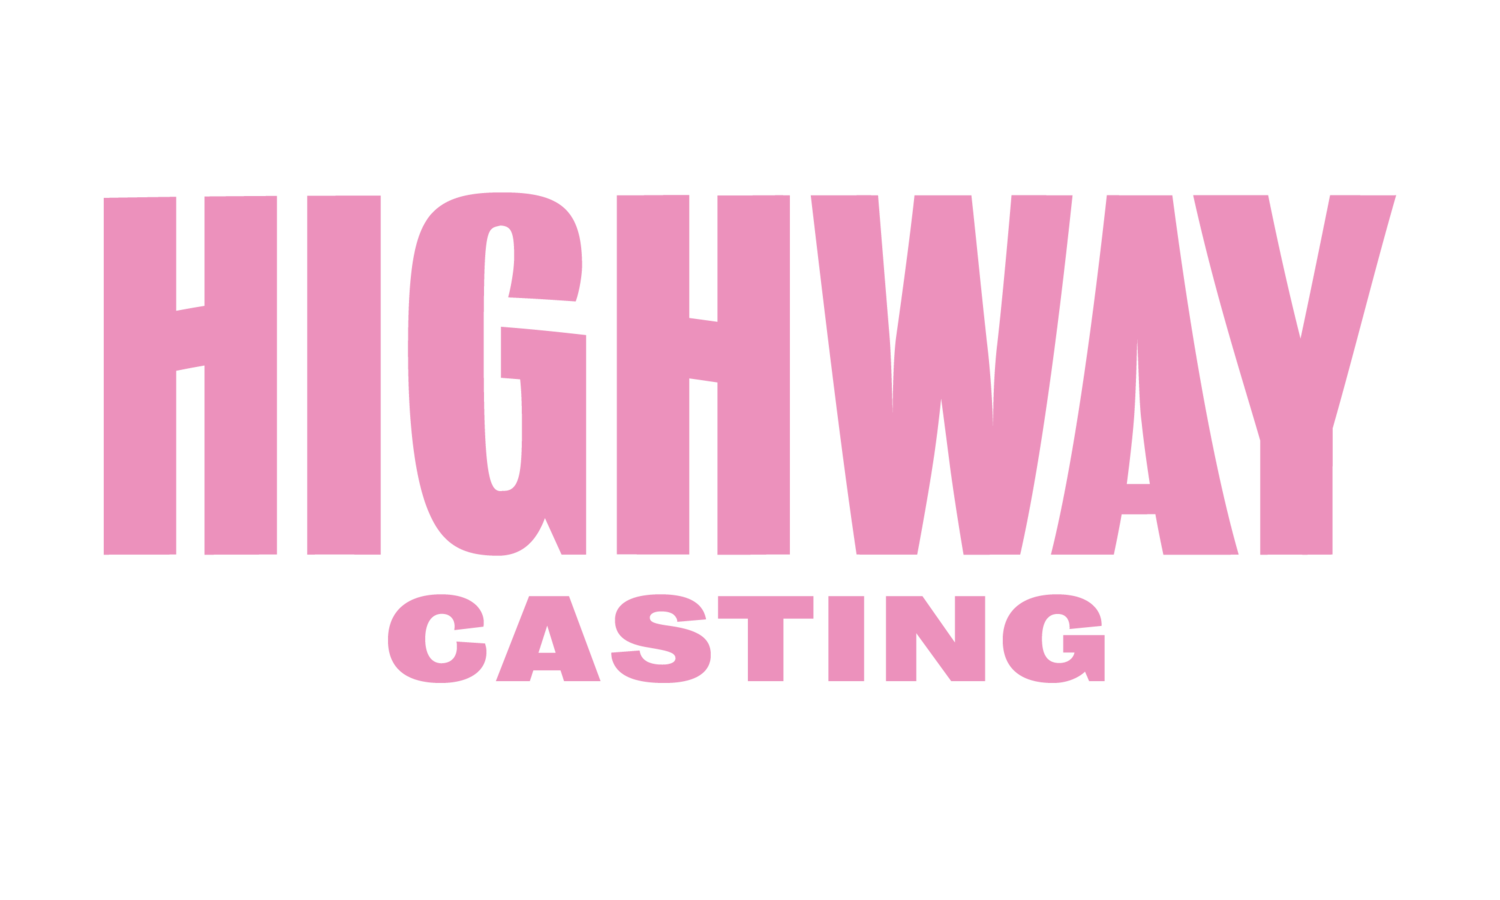 Highway Casting